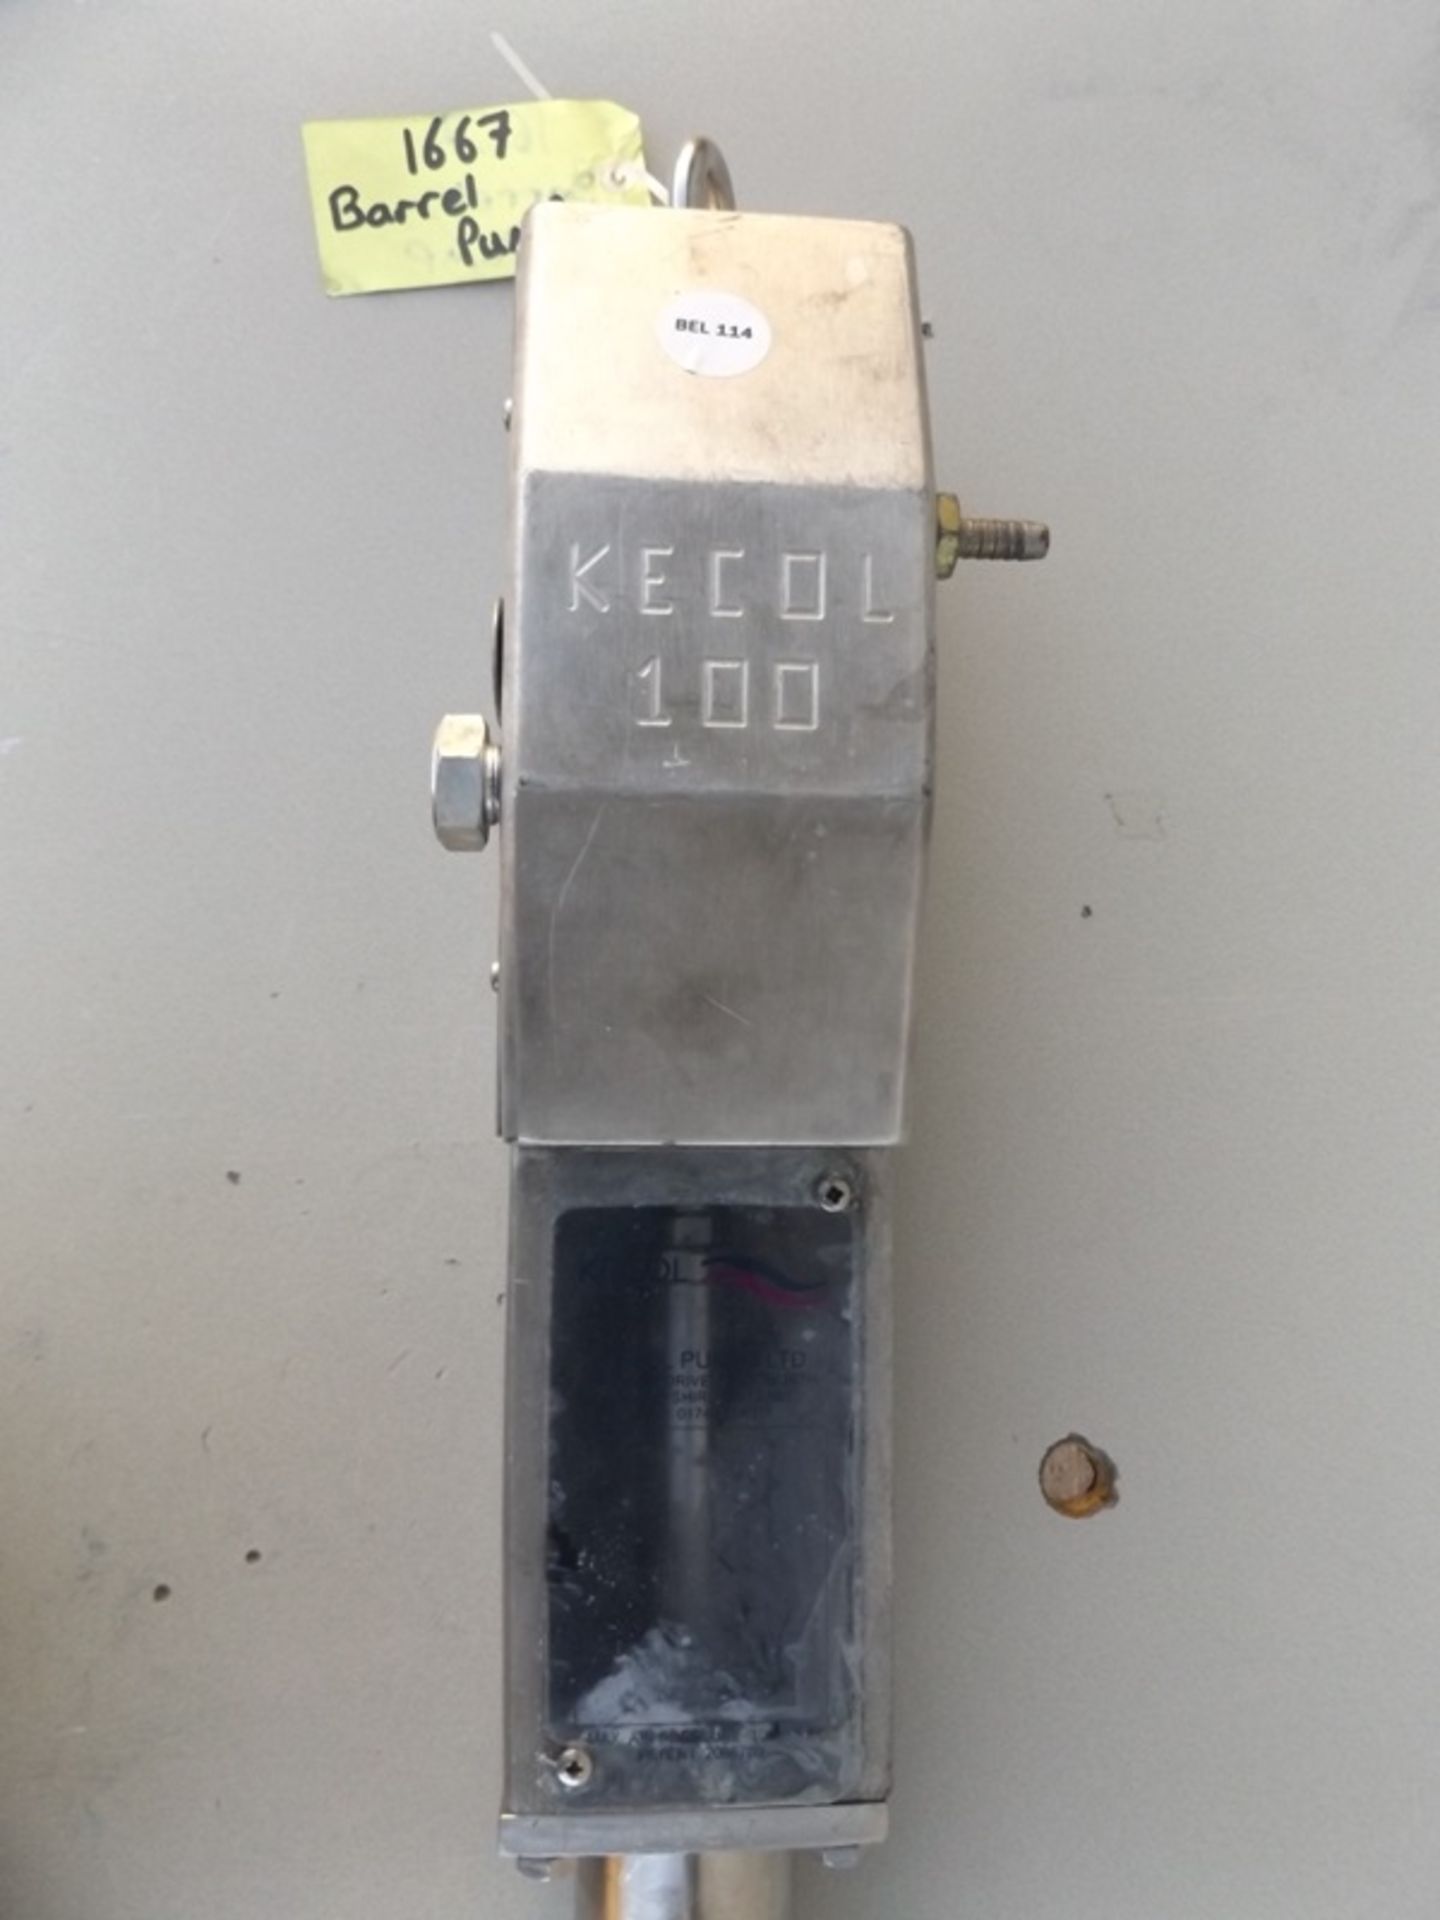 Kecol model H100 compressed air reciprocating pump - Image 3 of 4